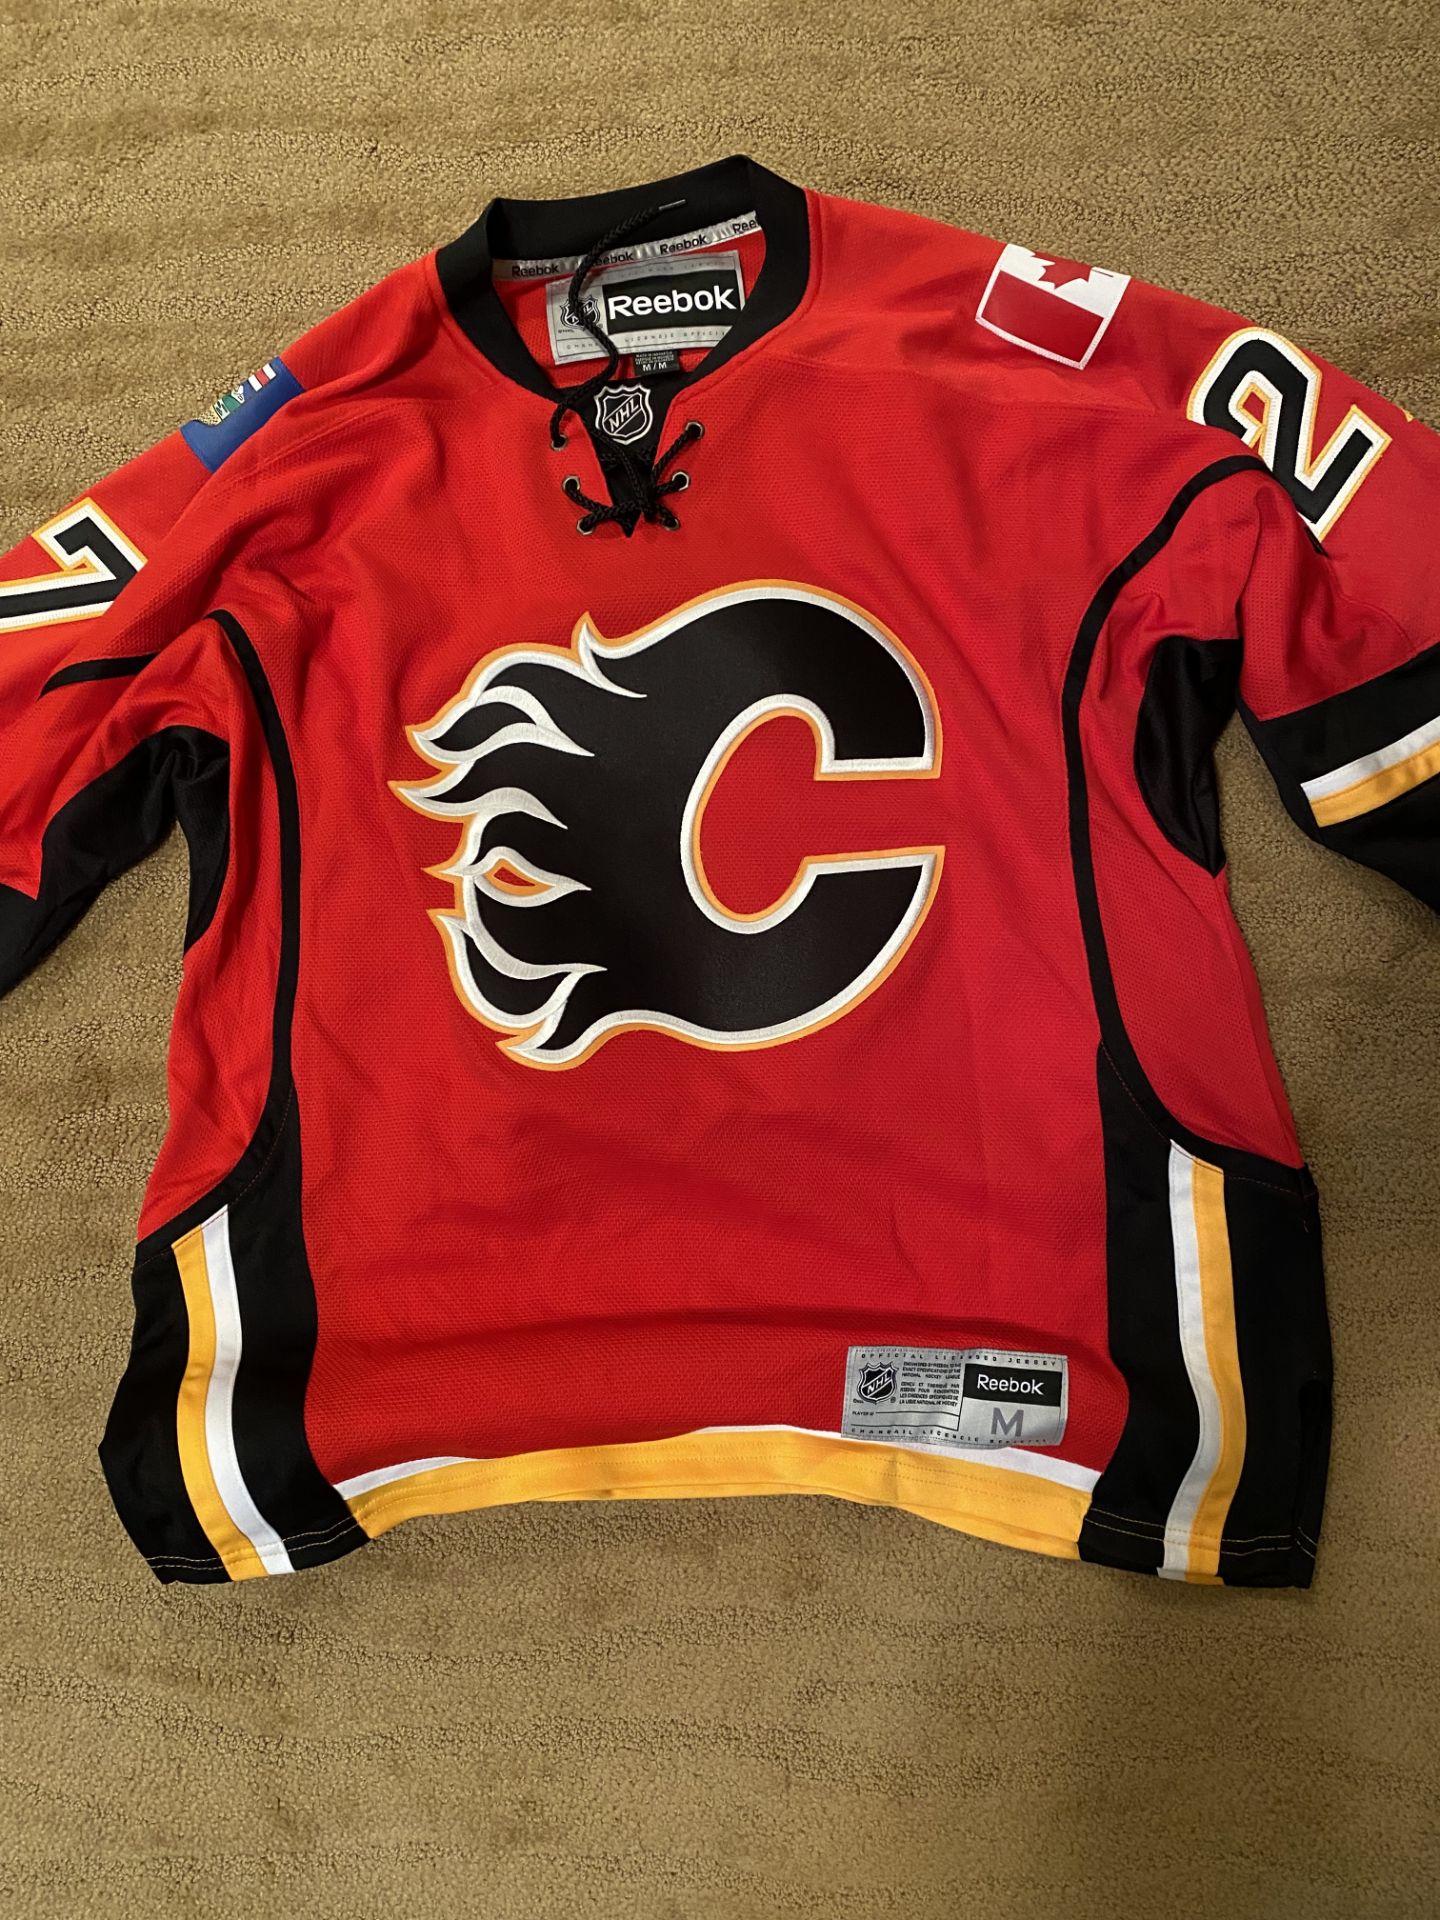 Calgary Flames #27 Jersey - Image 2 of 5